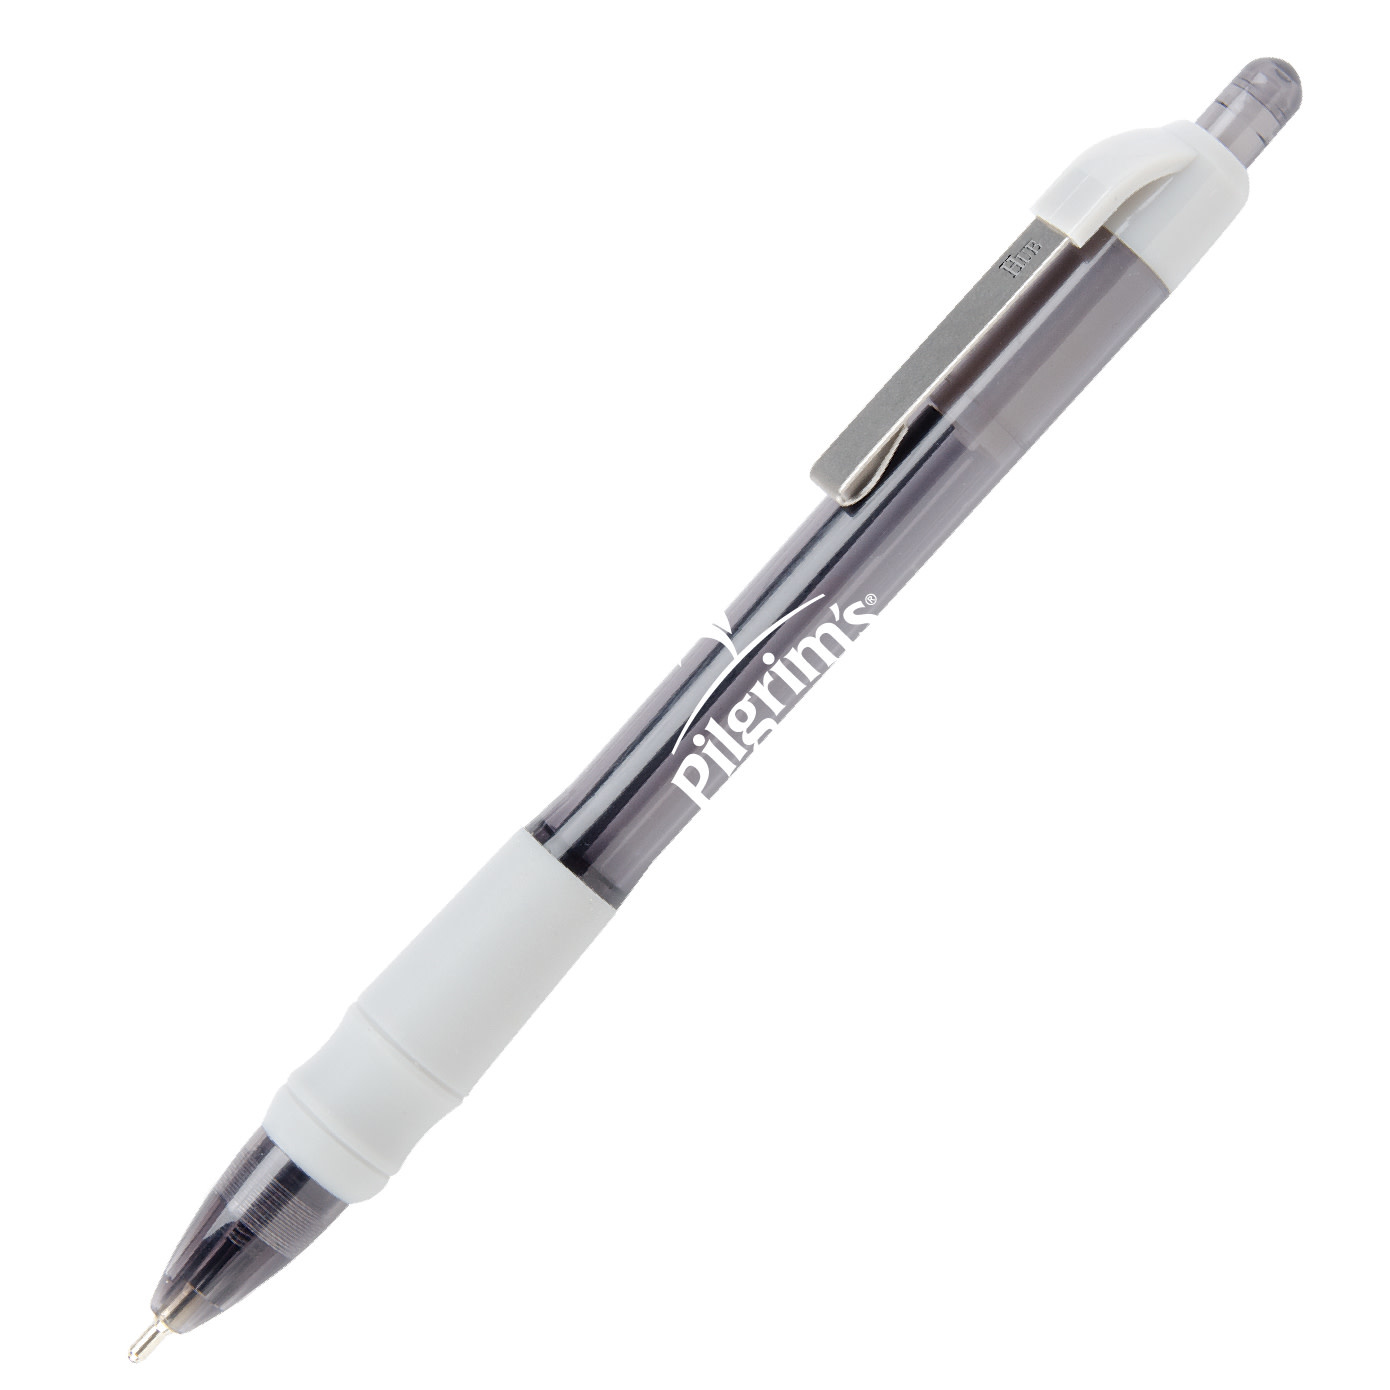 4imprint MaxGlide Pen (Light Grey Pen)